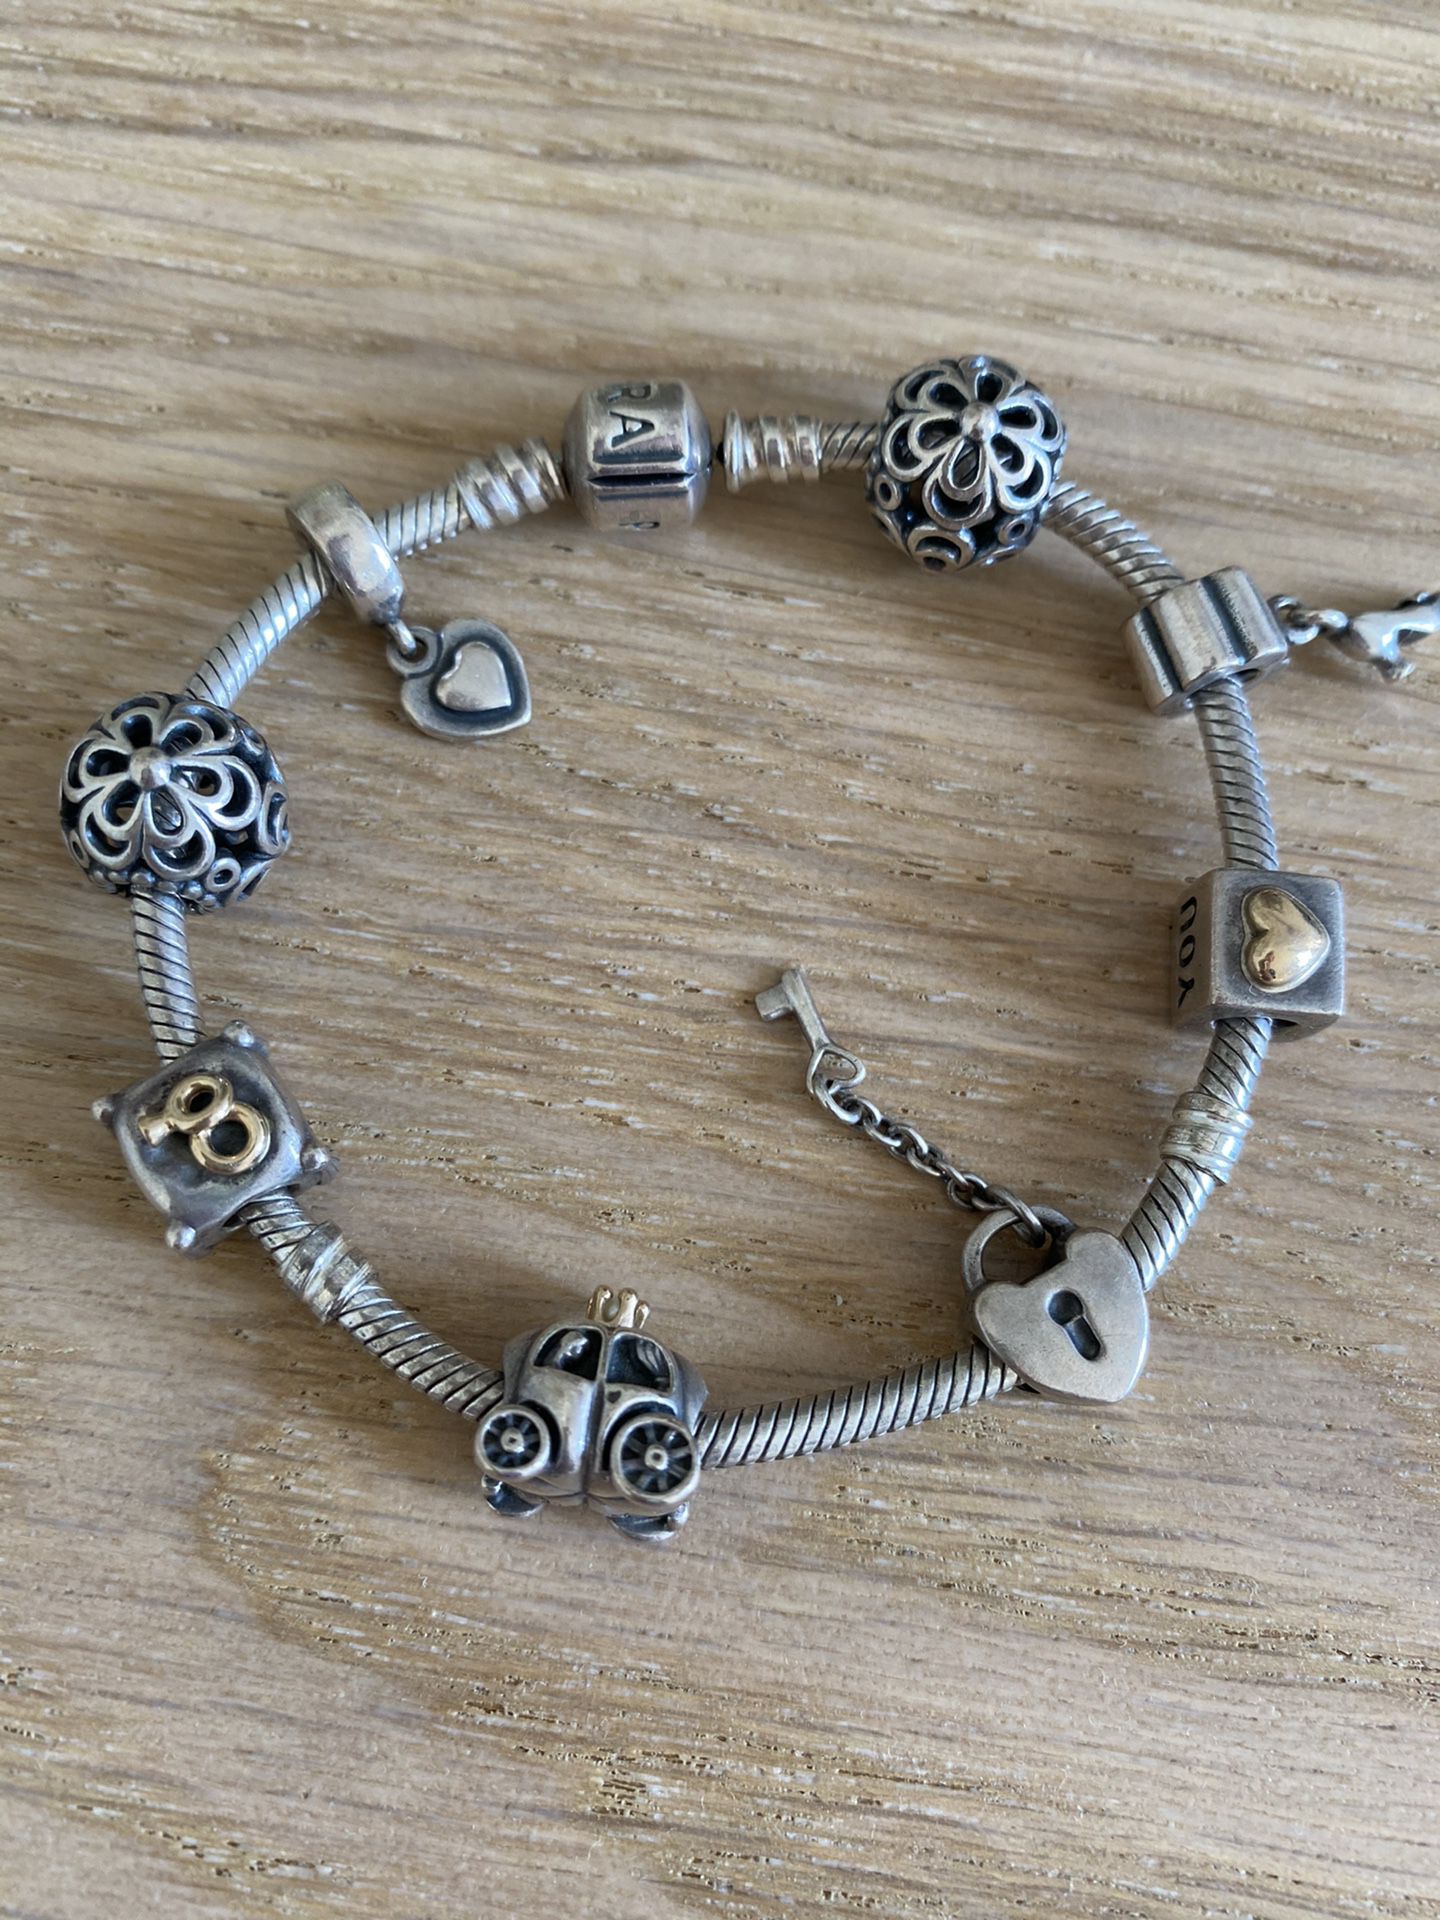 Pandora bracelet 7.5” with 8 charms (sterling silver original)